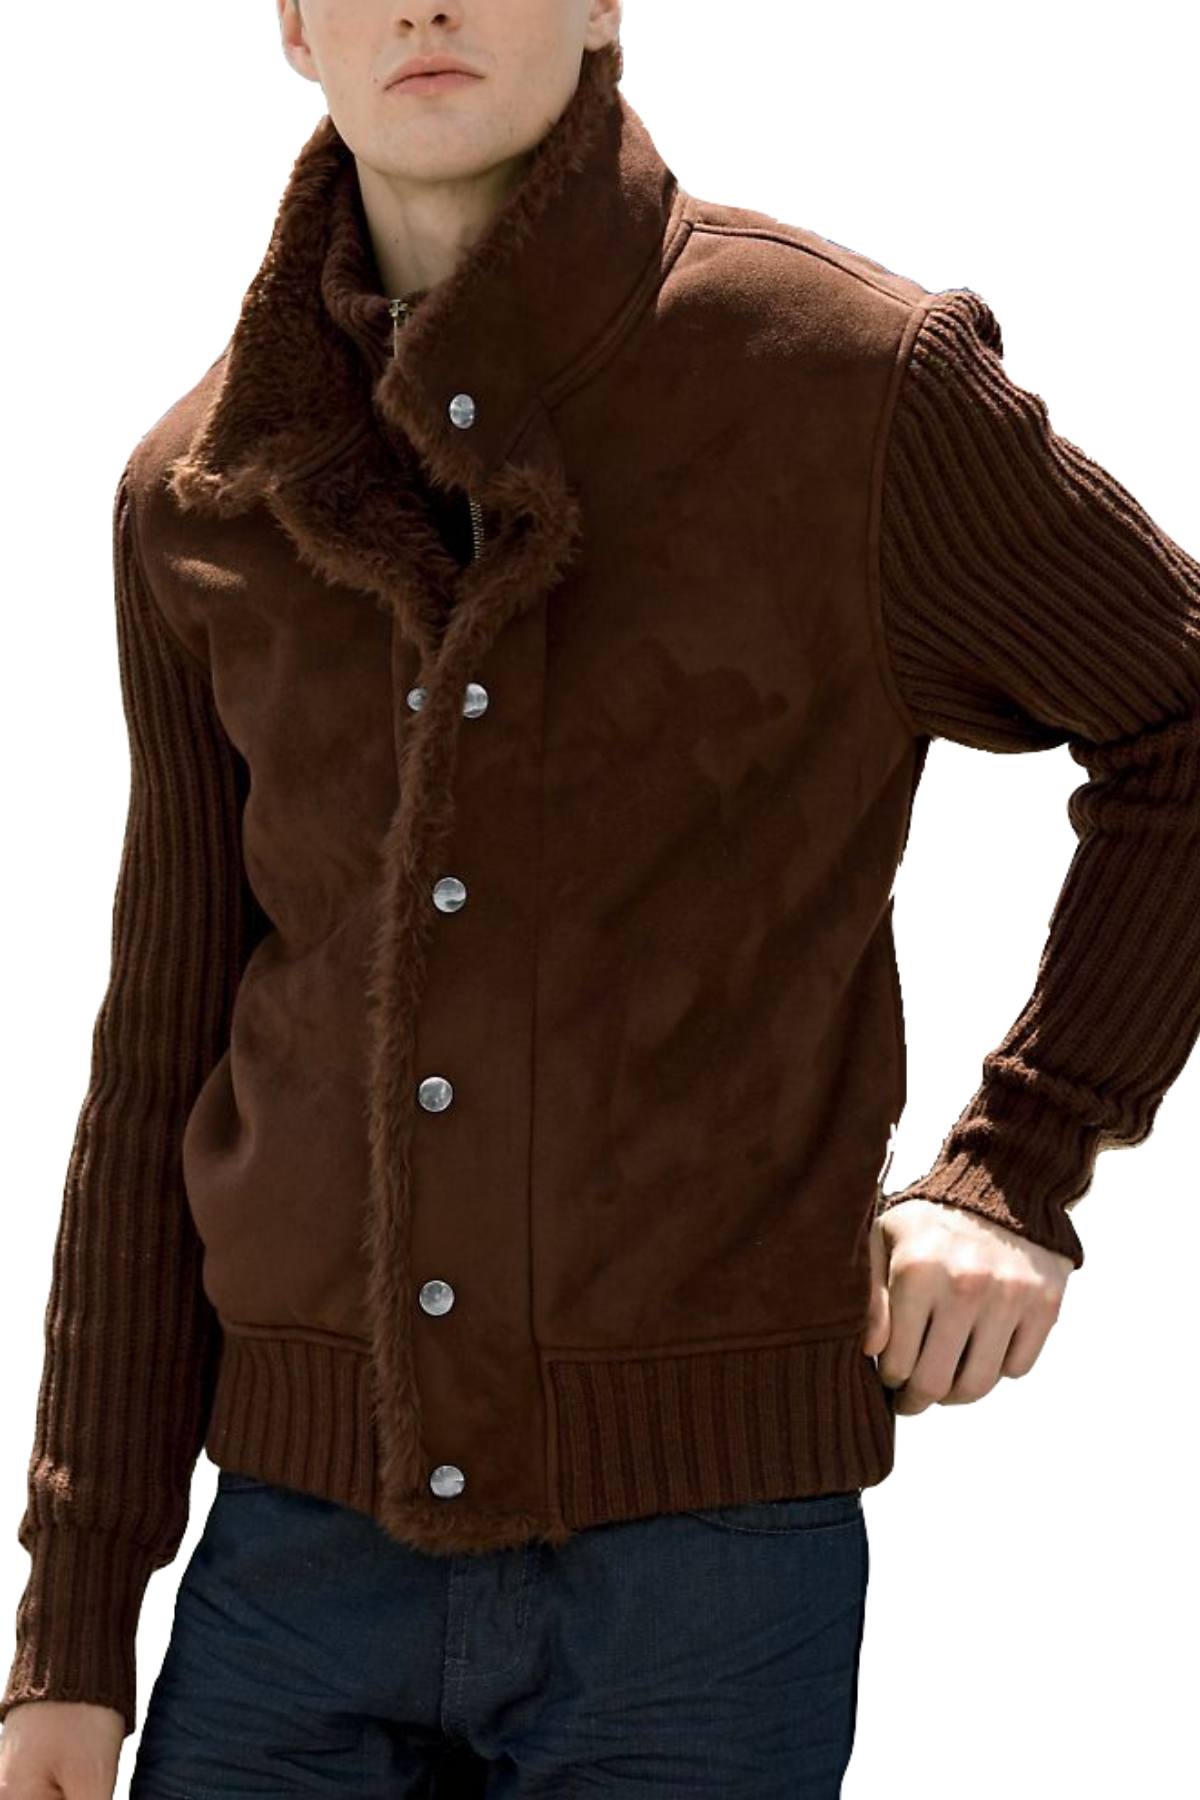 Men America Chocolate Iceland Sweater Jacket